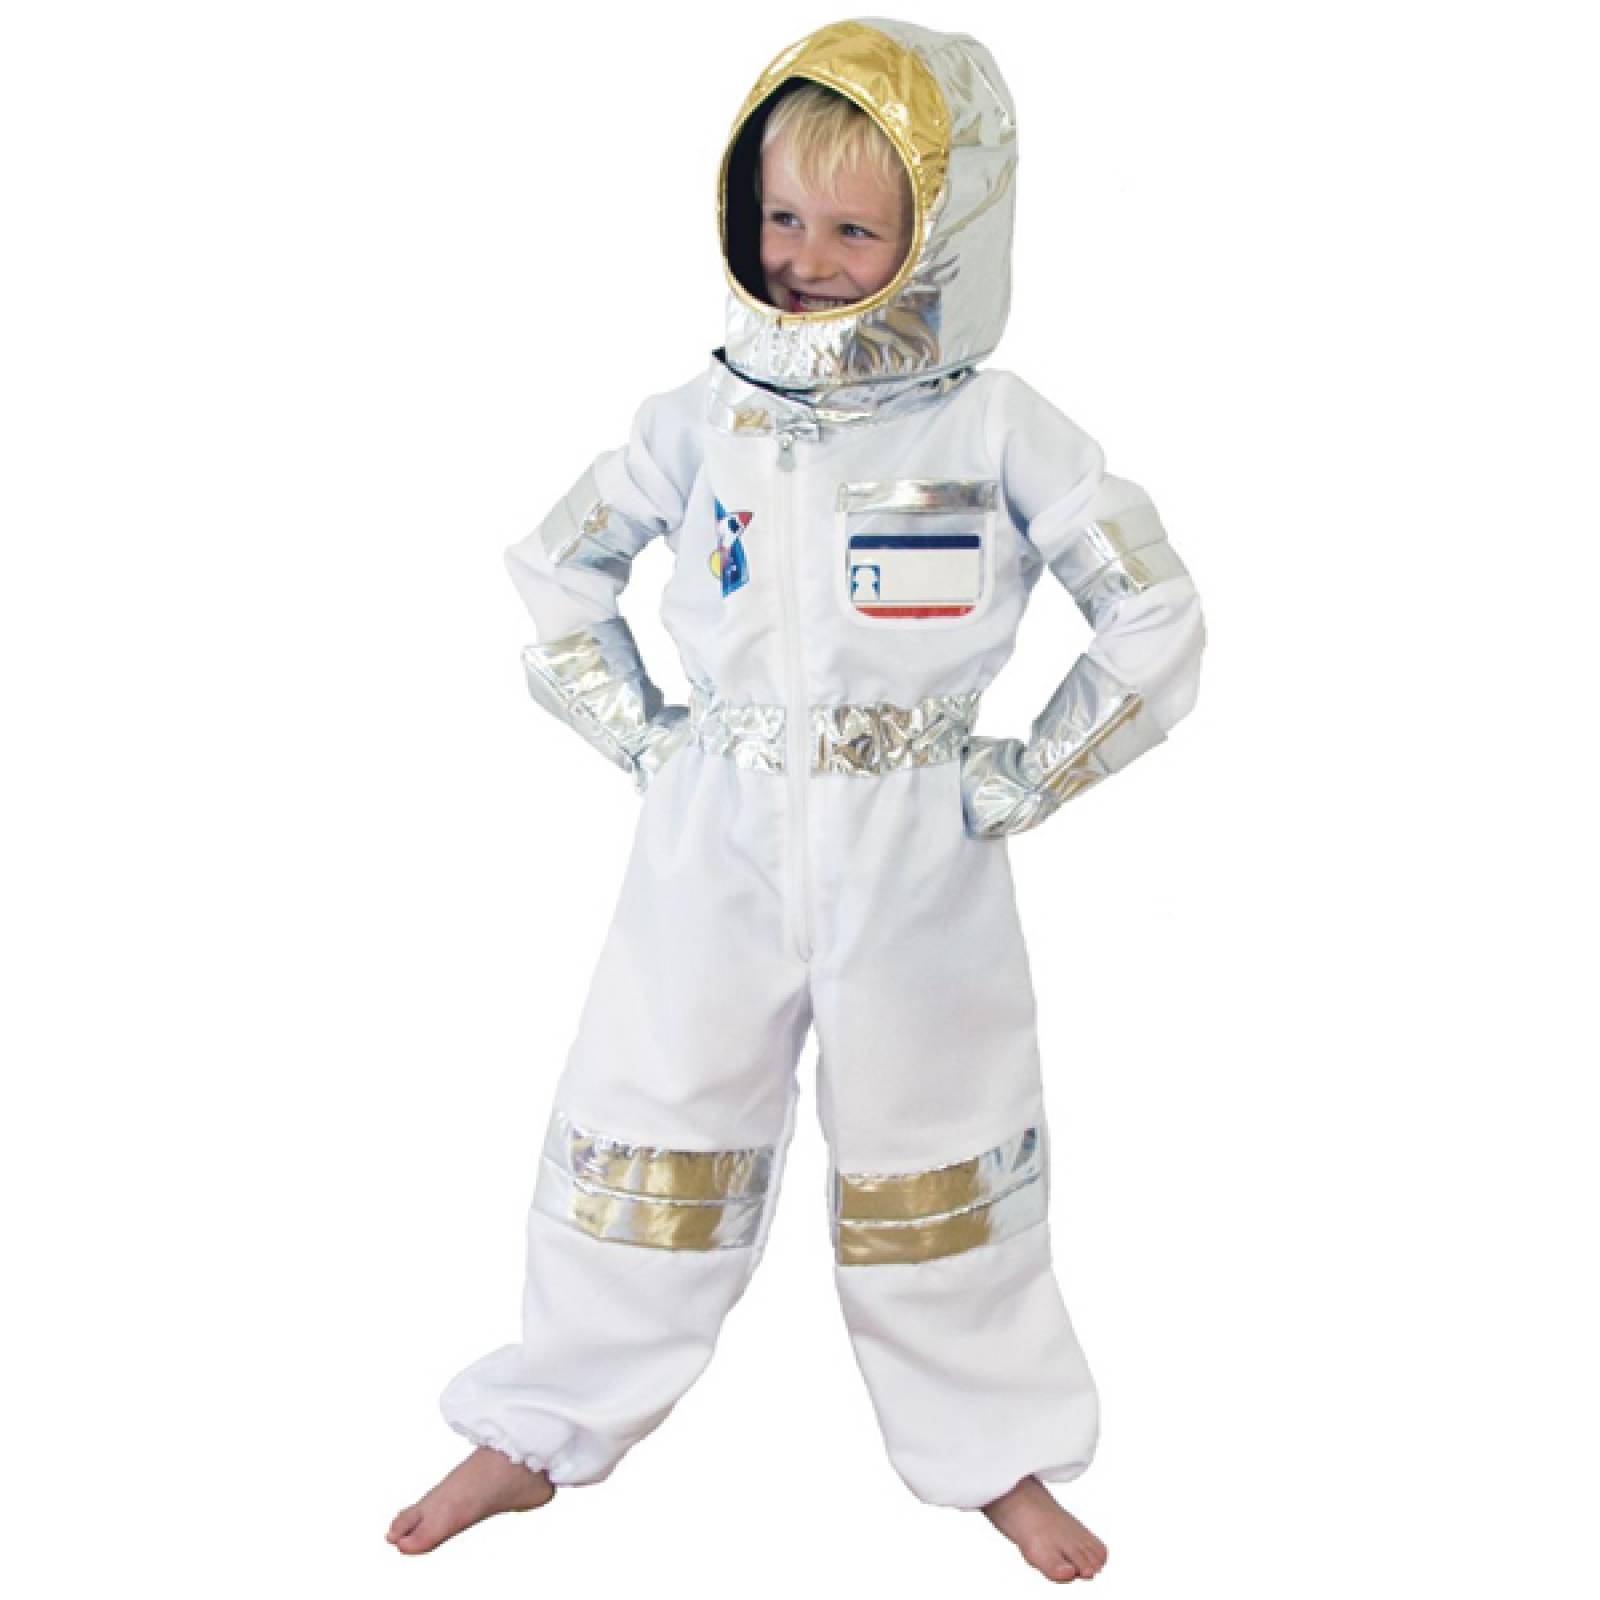 Fancy Dress Role Play Costume Set - Astronaut